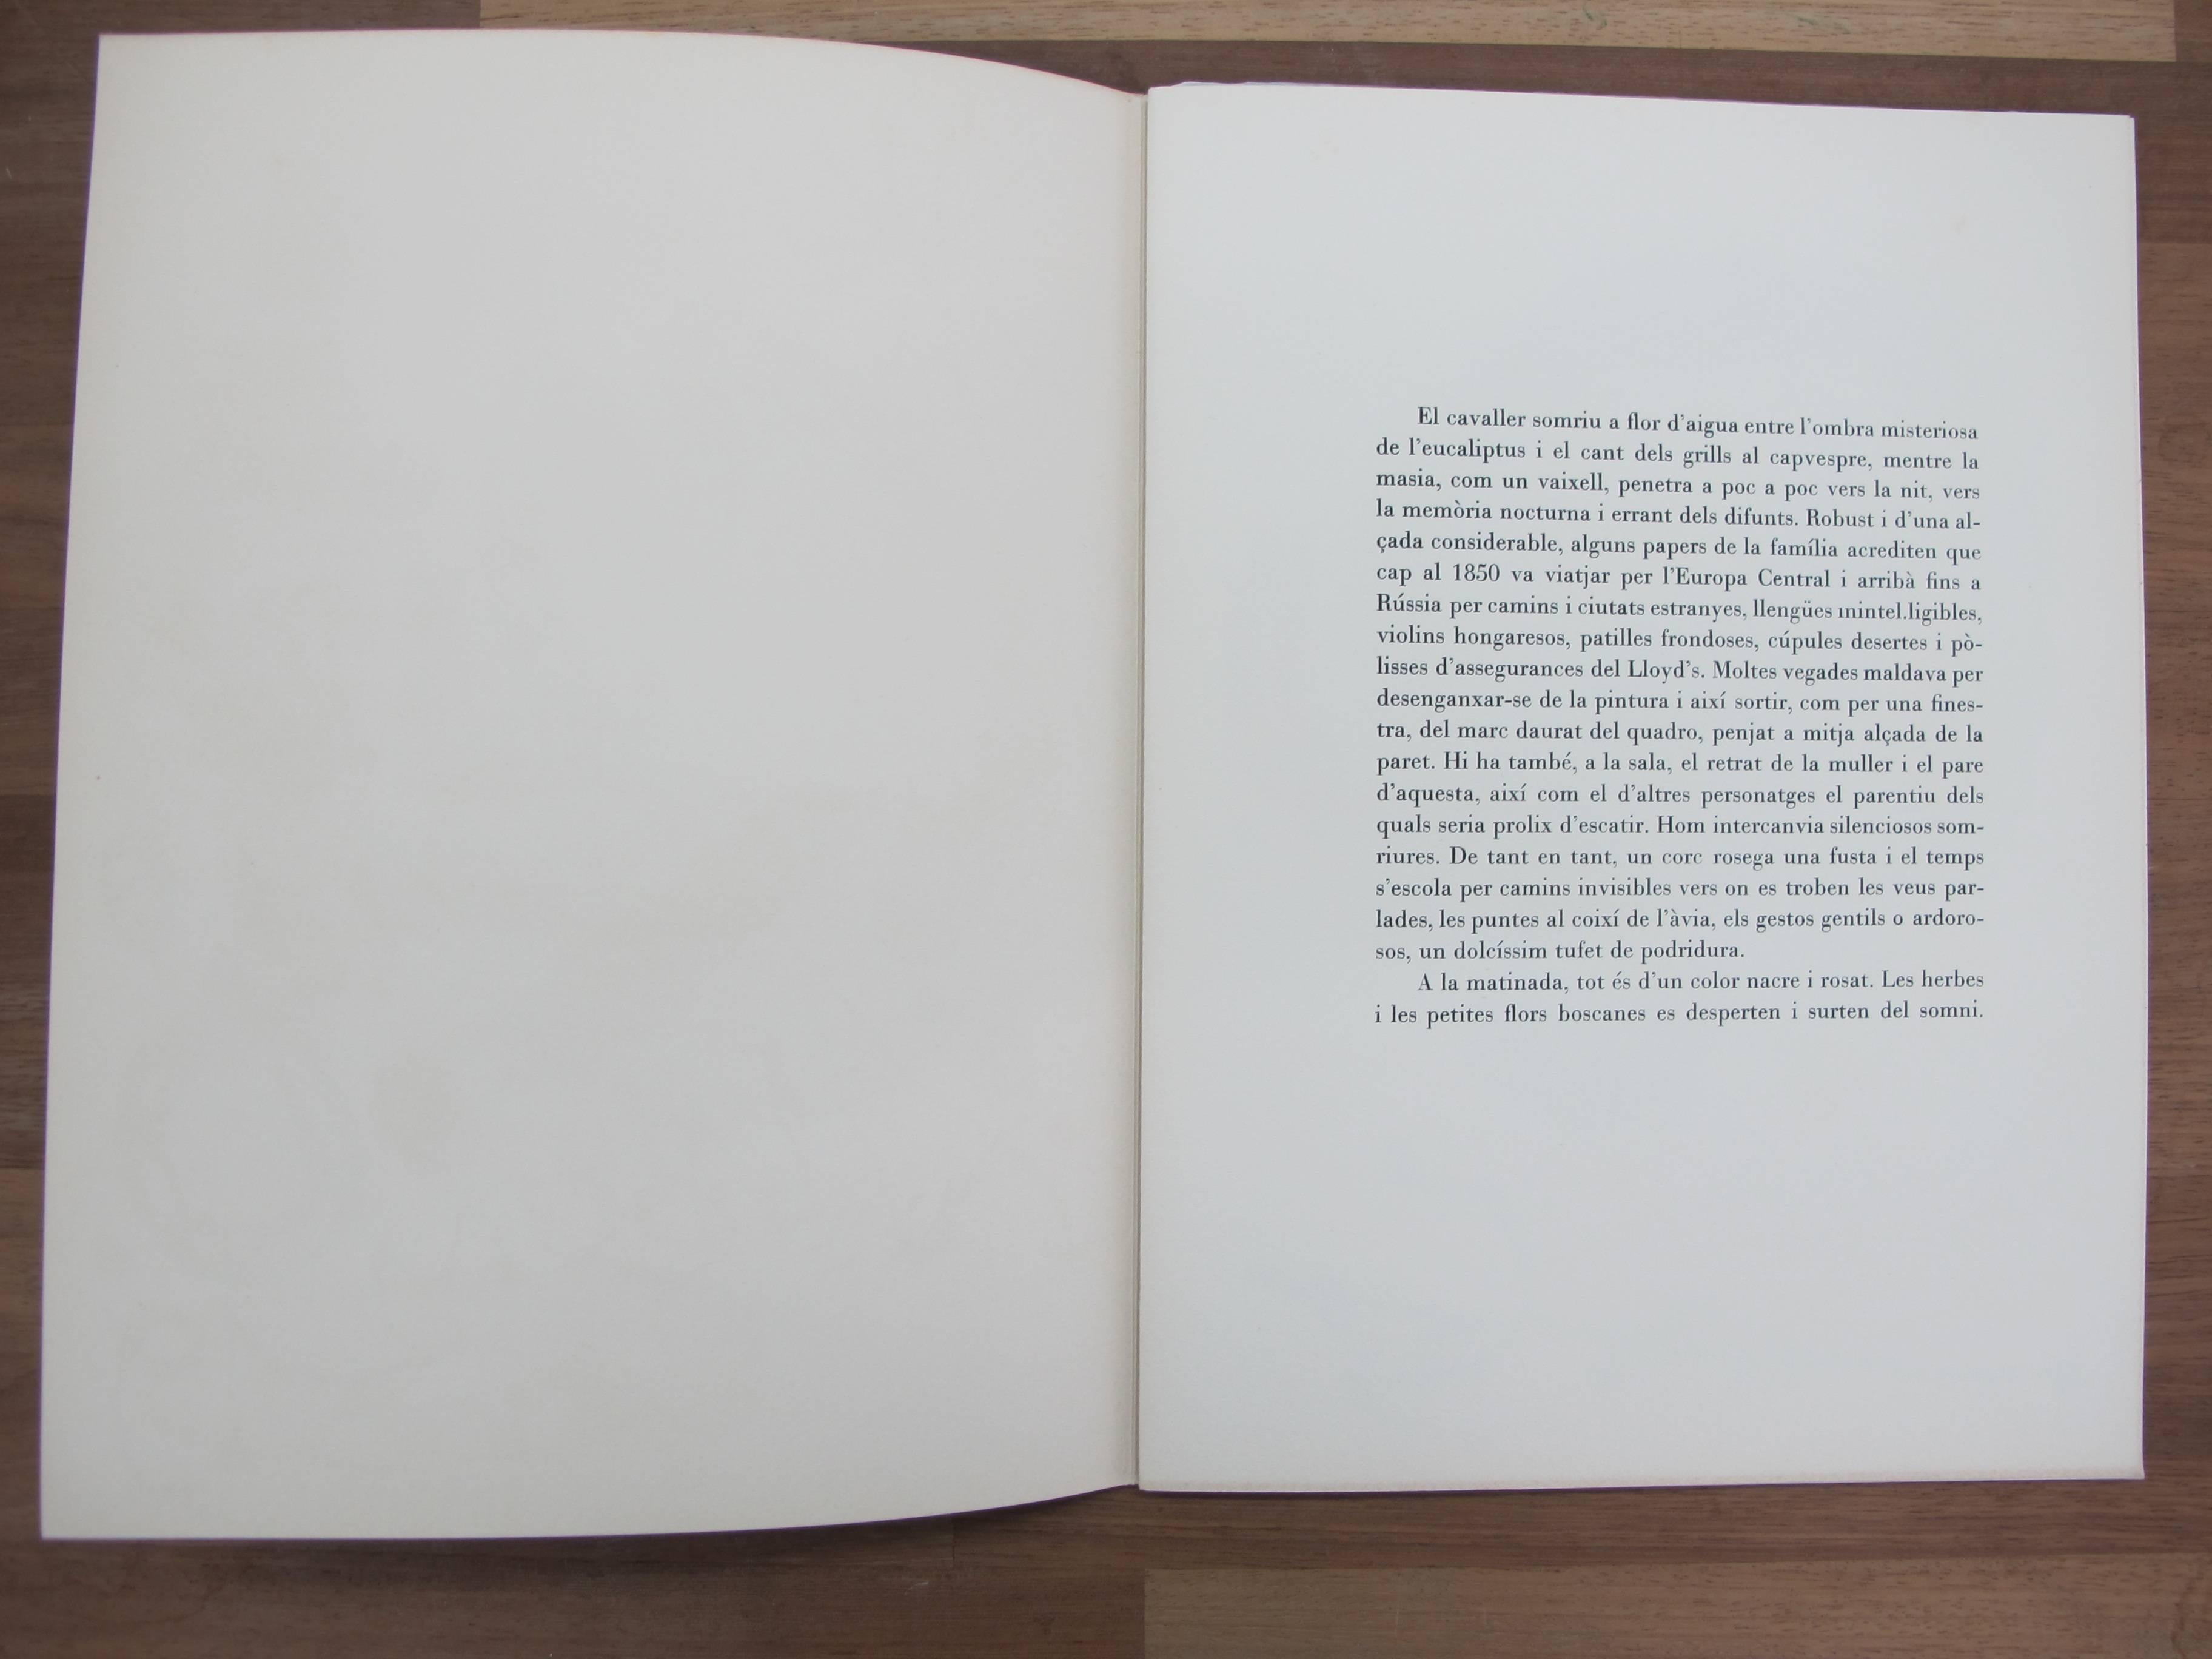 Spanish Joan Miró Album 19 with Four Original Lithographs